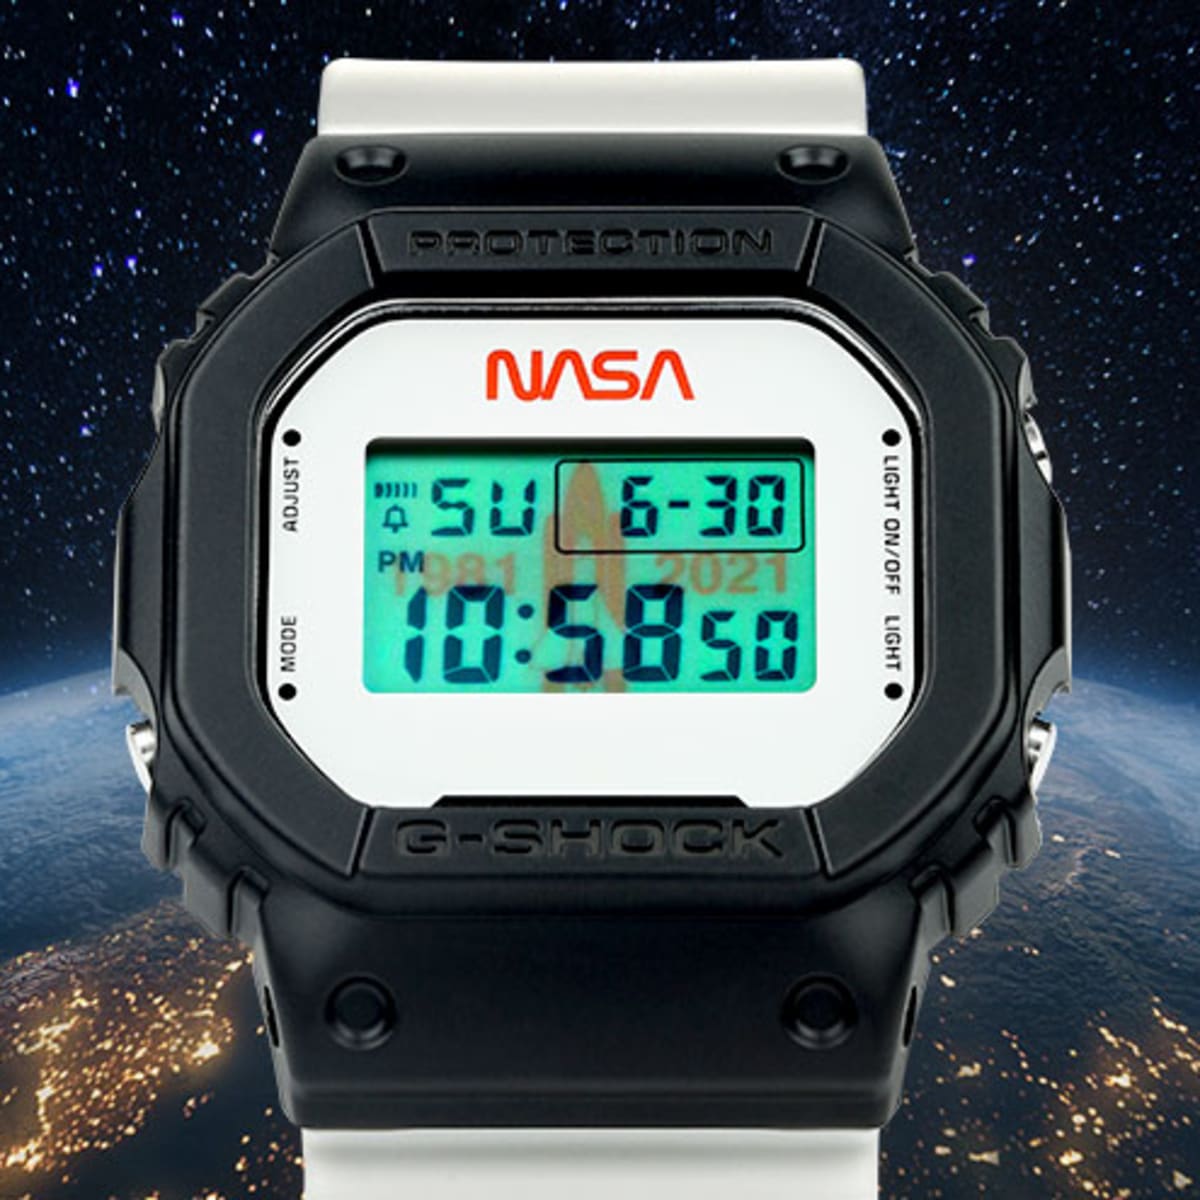 Blauw etnisch beu G-Shock releases its second watch with NASA - Acquire